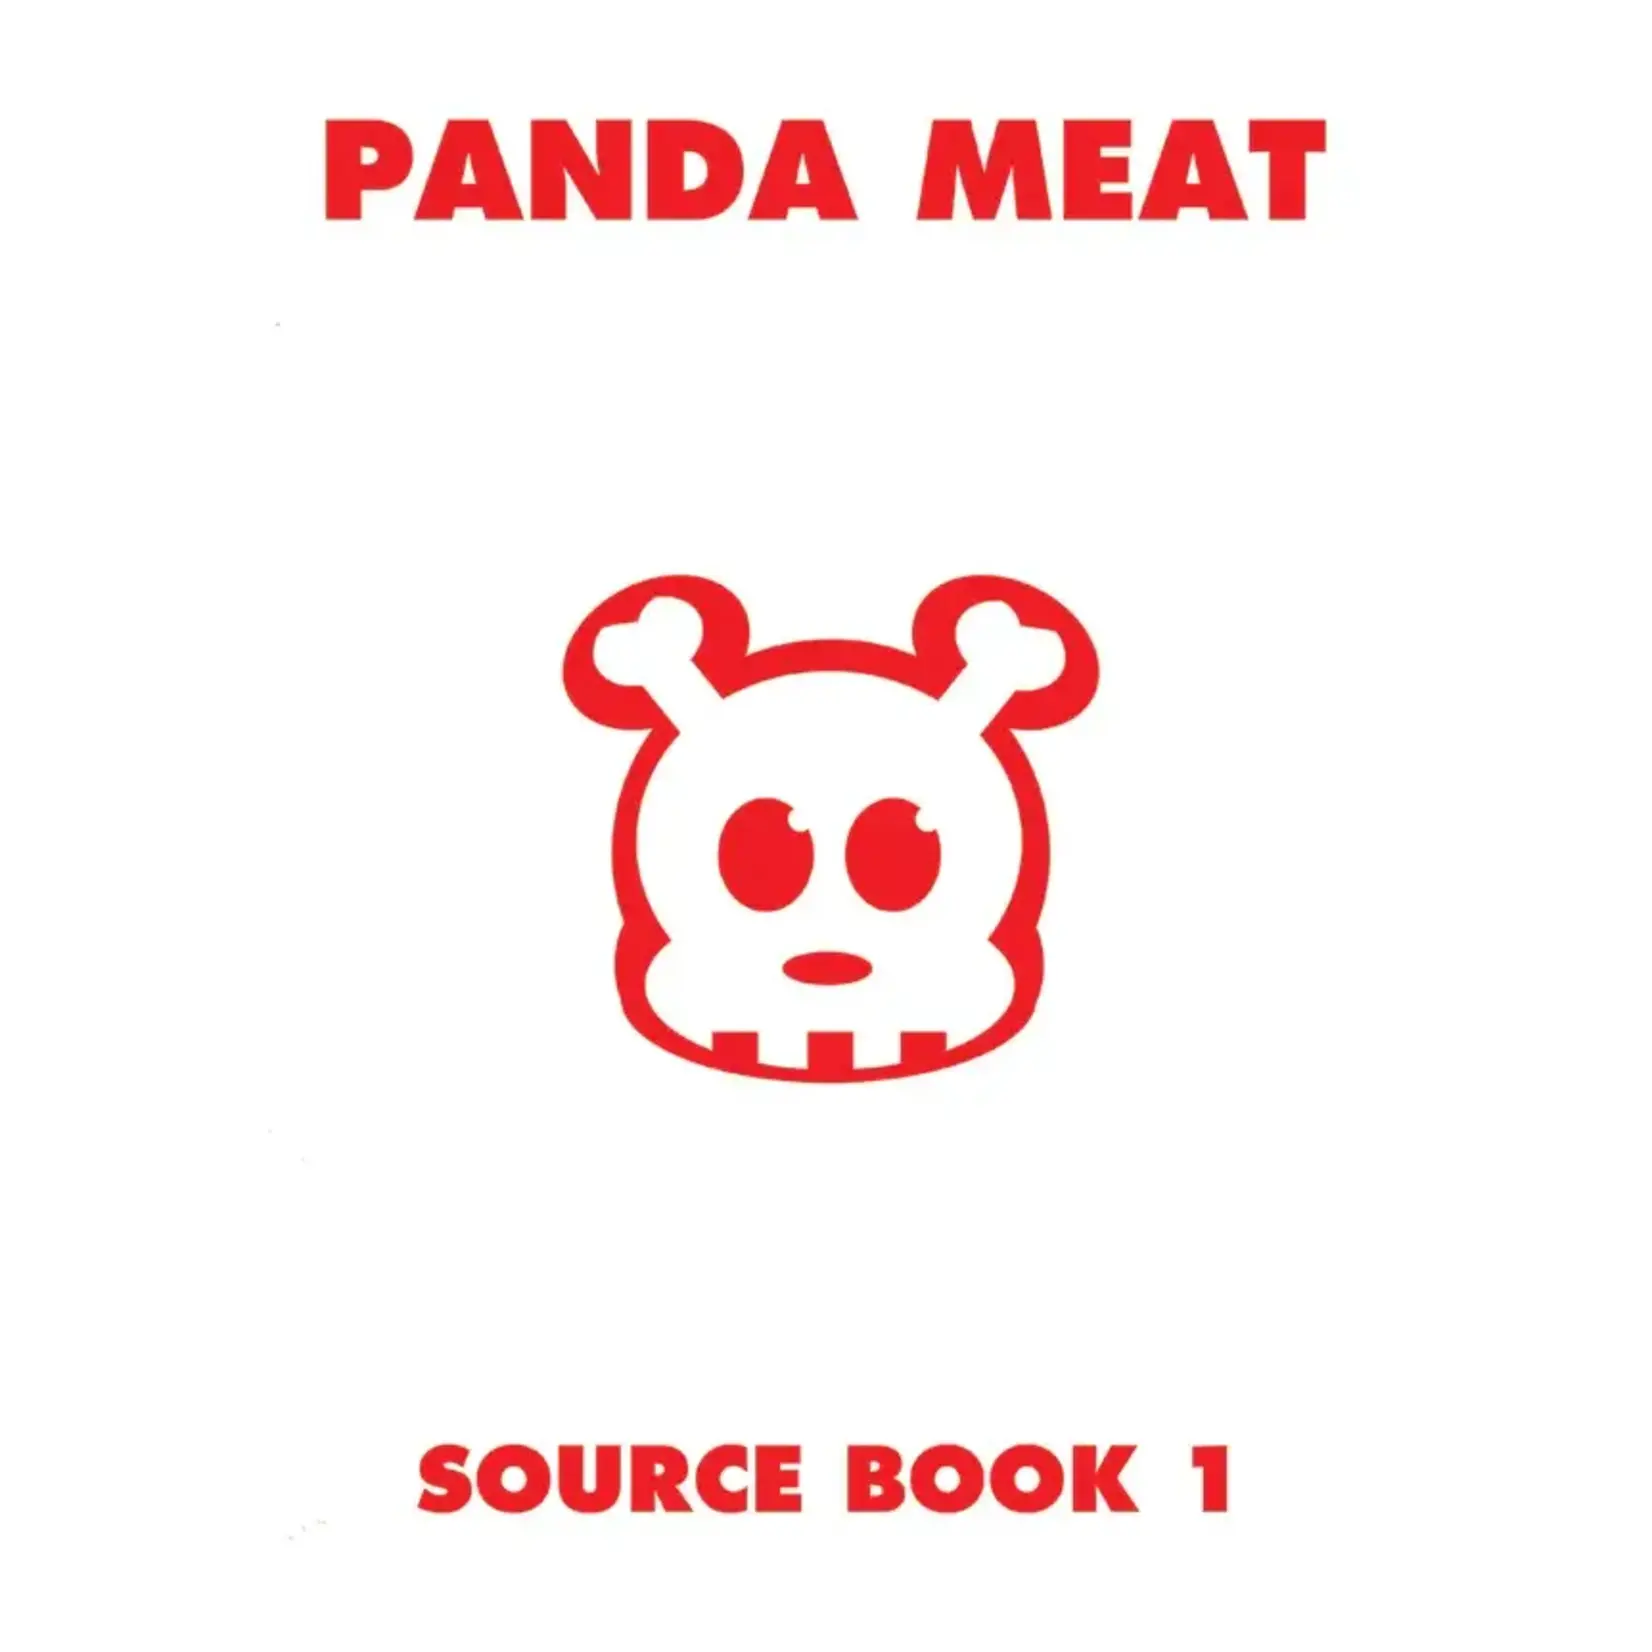 Frank Kozik (Editor) - Panda Meat Source Book 1 - Hardback (NEW)